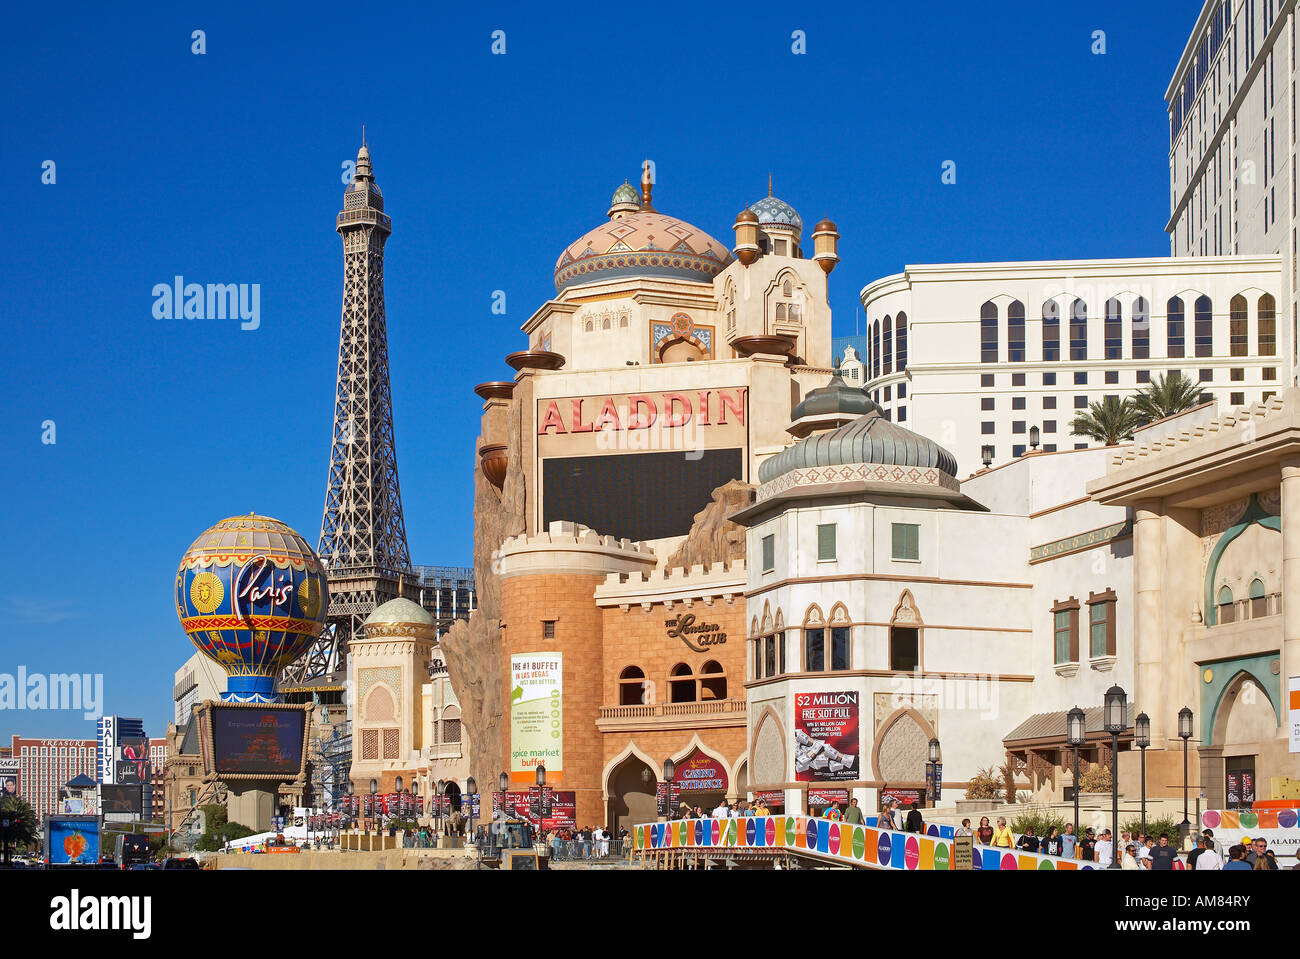 Paris Casino and Aladdin Hotels, Las Vegas, Nevada